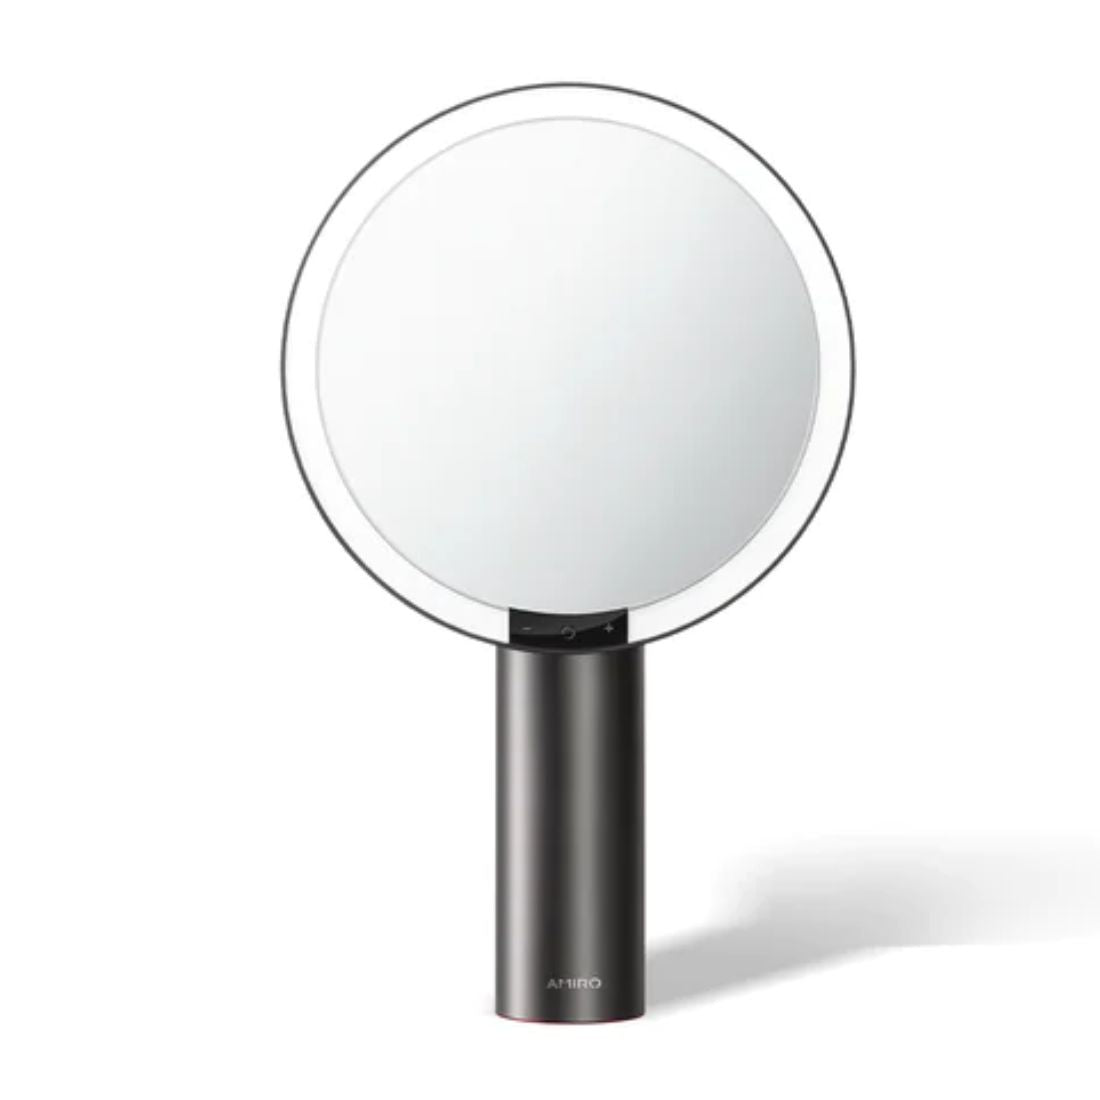 AMIRO Oath O2 LED Auto Illuminate Vanity Mirror - Black